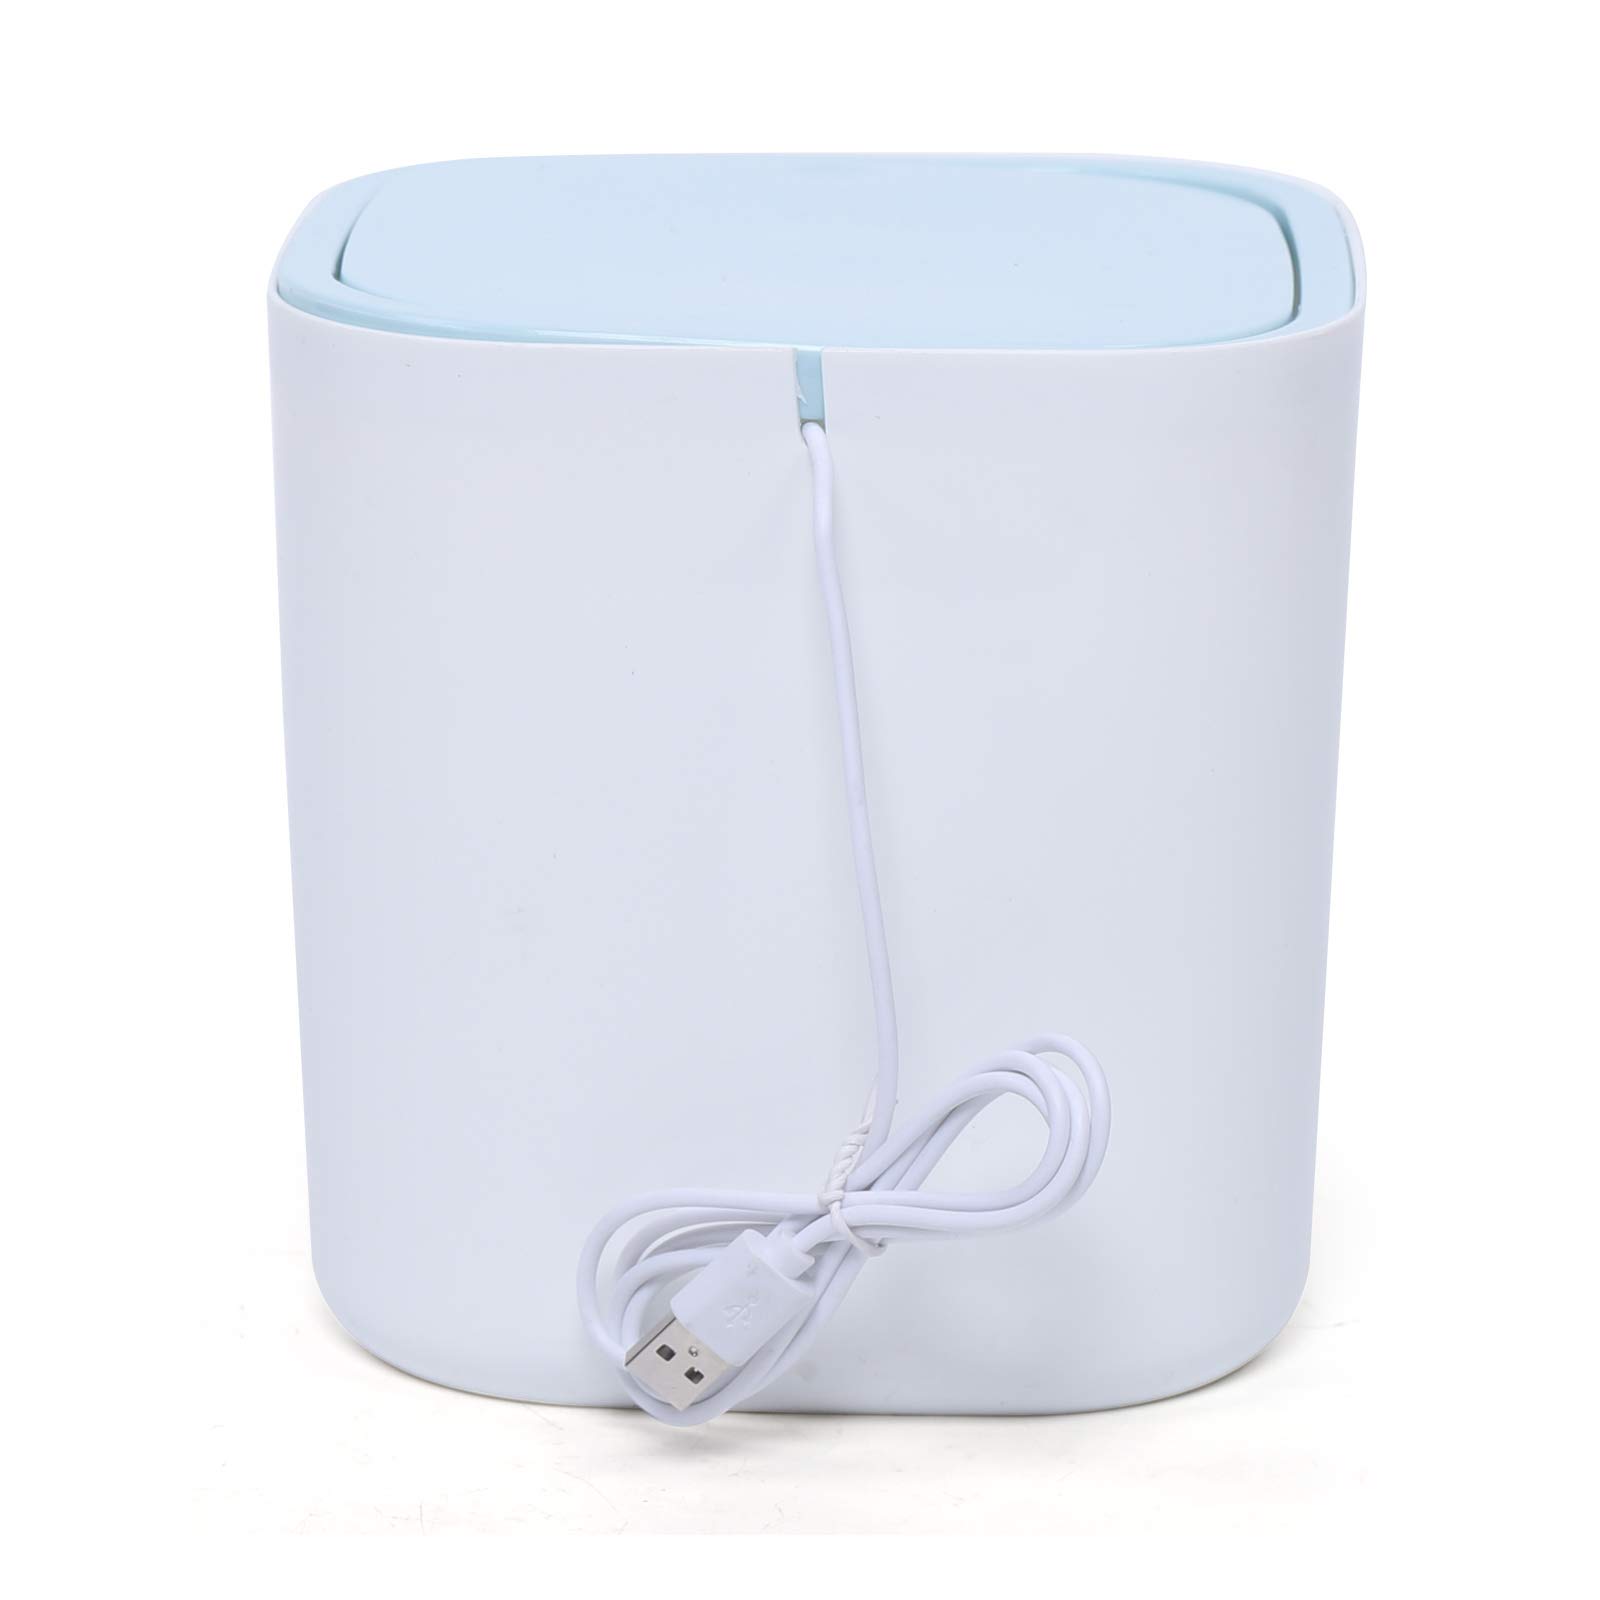 Mini Portable Washing Machine Underwear Ultrasonic Washing Machine Compact USB Laundry Machine for Underwear, Socks, Baby Clothes 3.8L Mini Washer